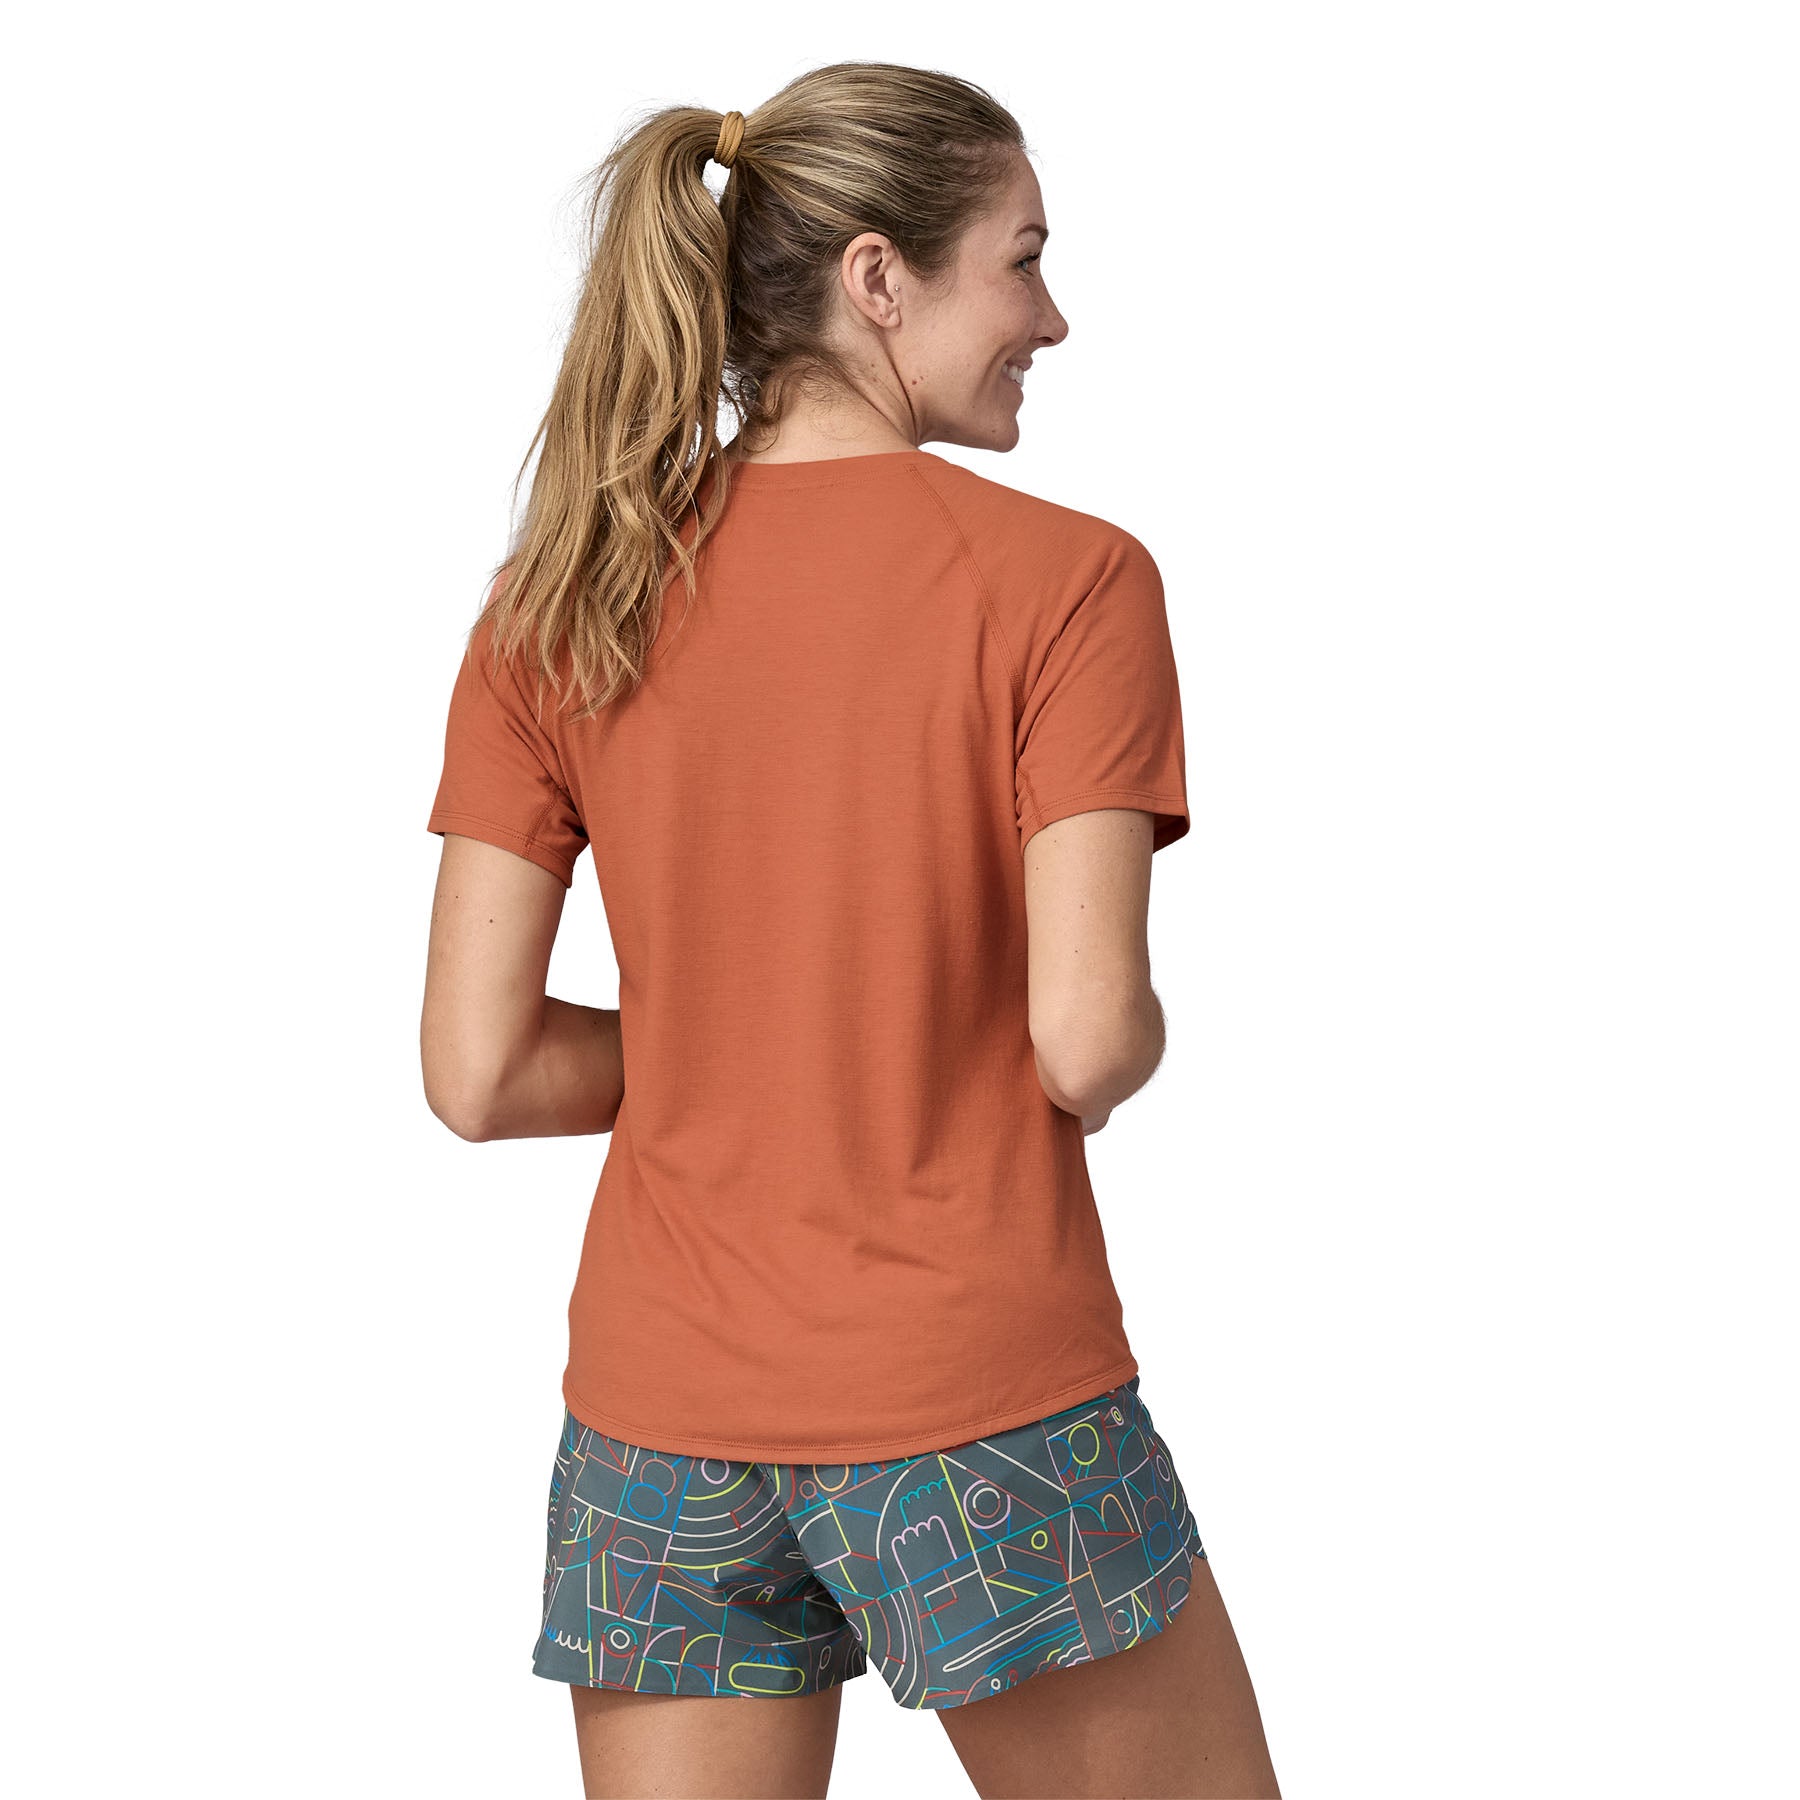 Women's Capilene® Cool Trail Graphic Shirt